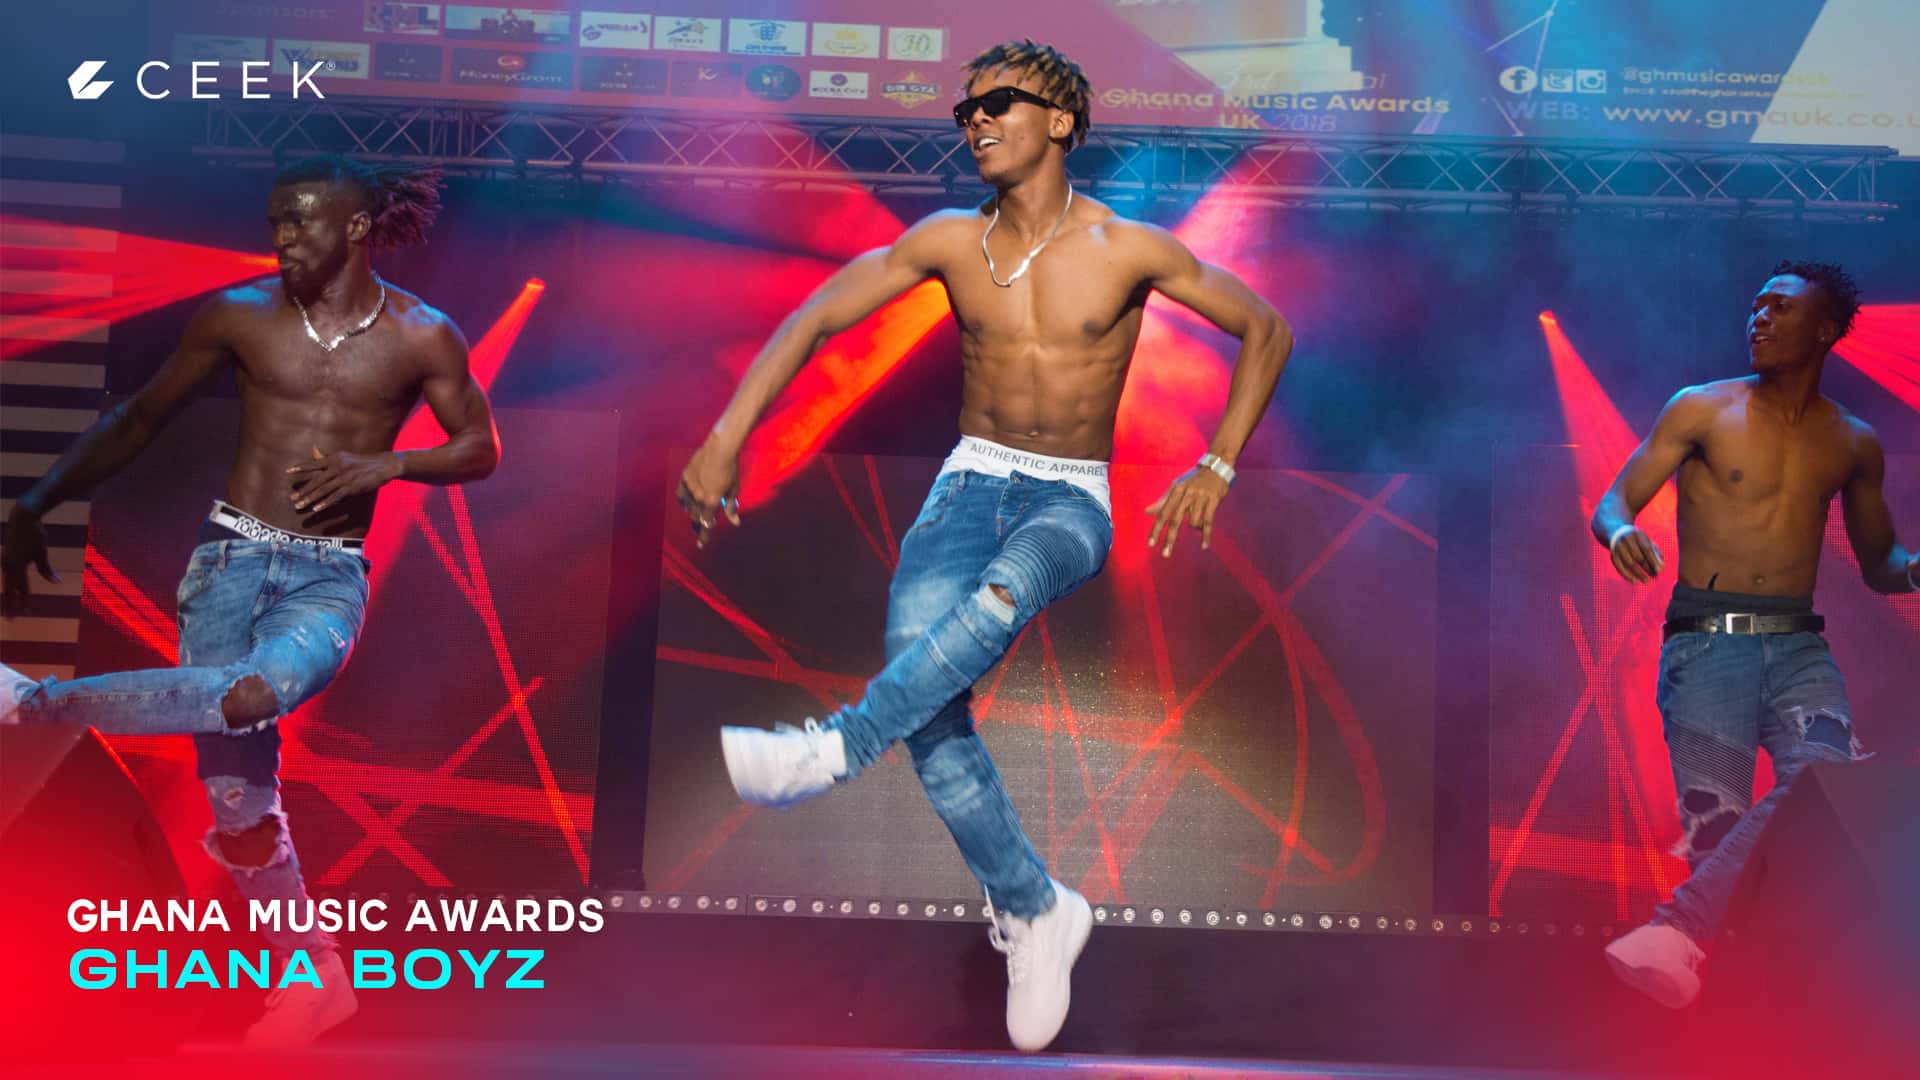 Ghana Music Awards UK  - Ghana Boyz